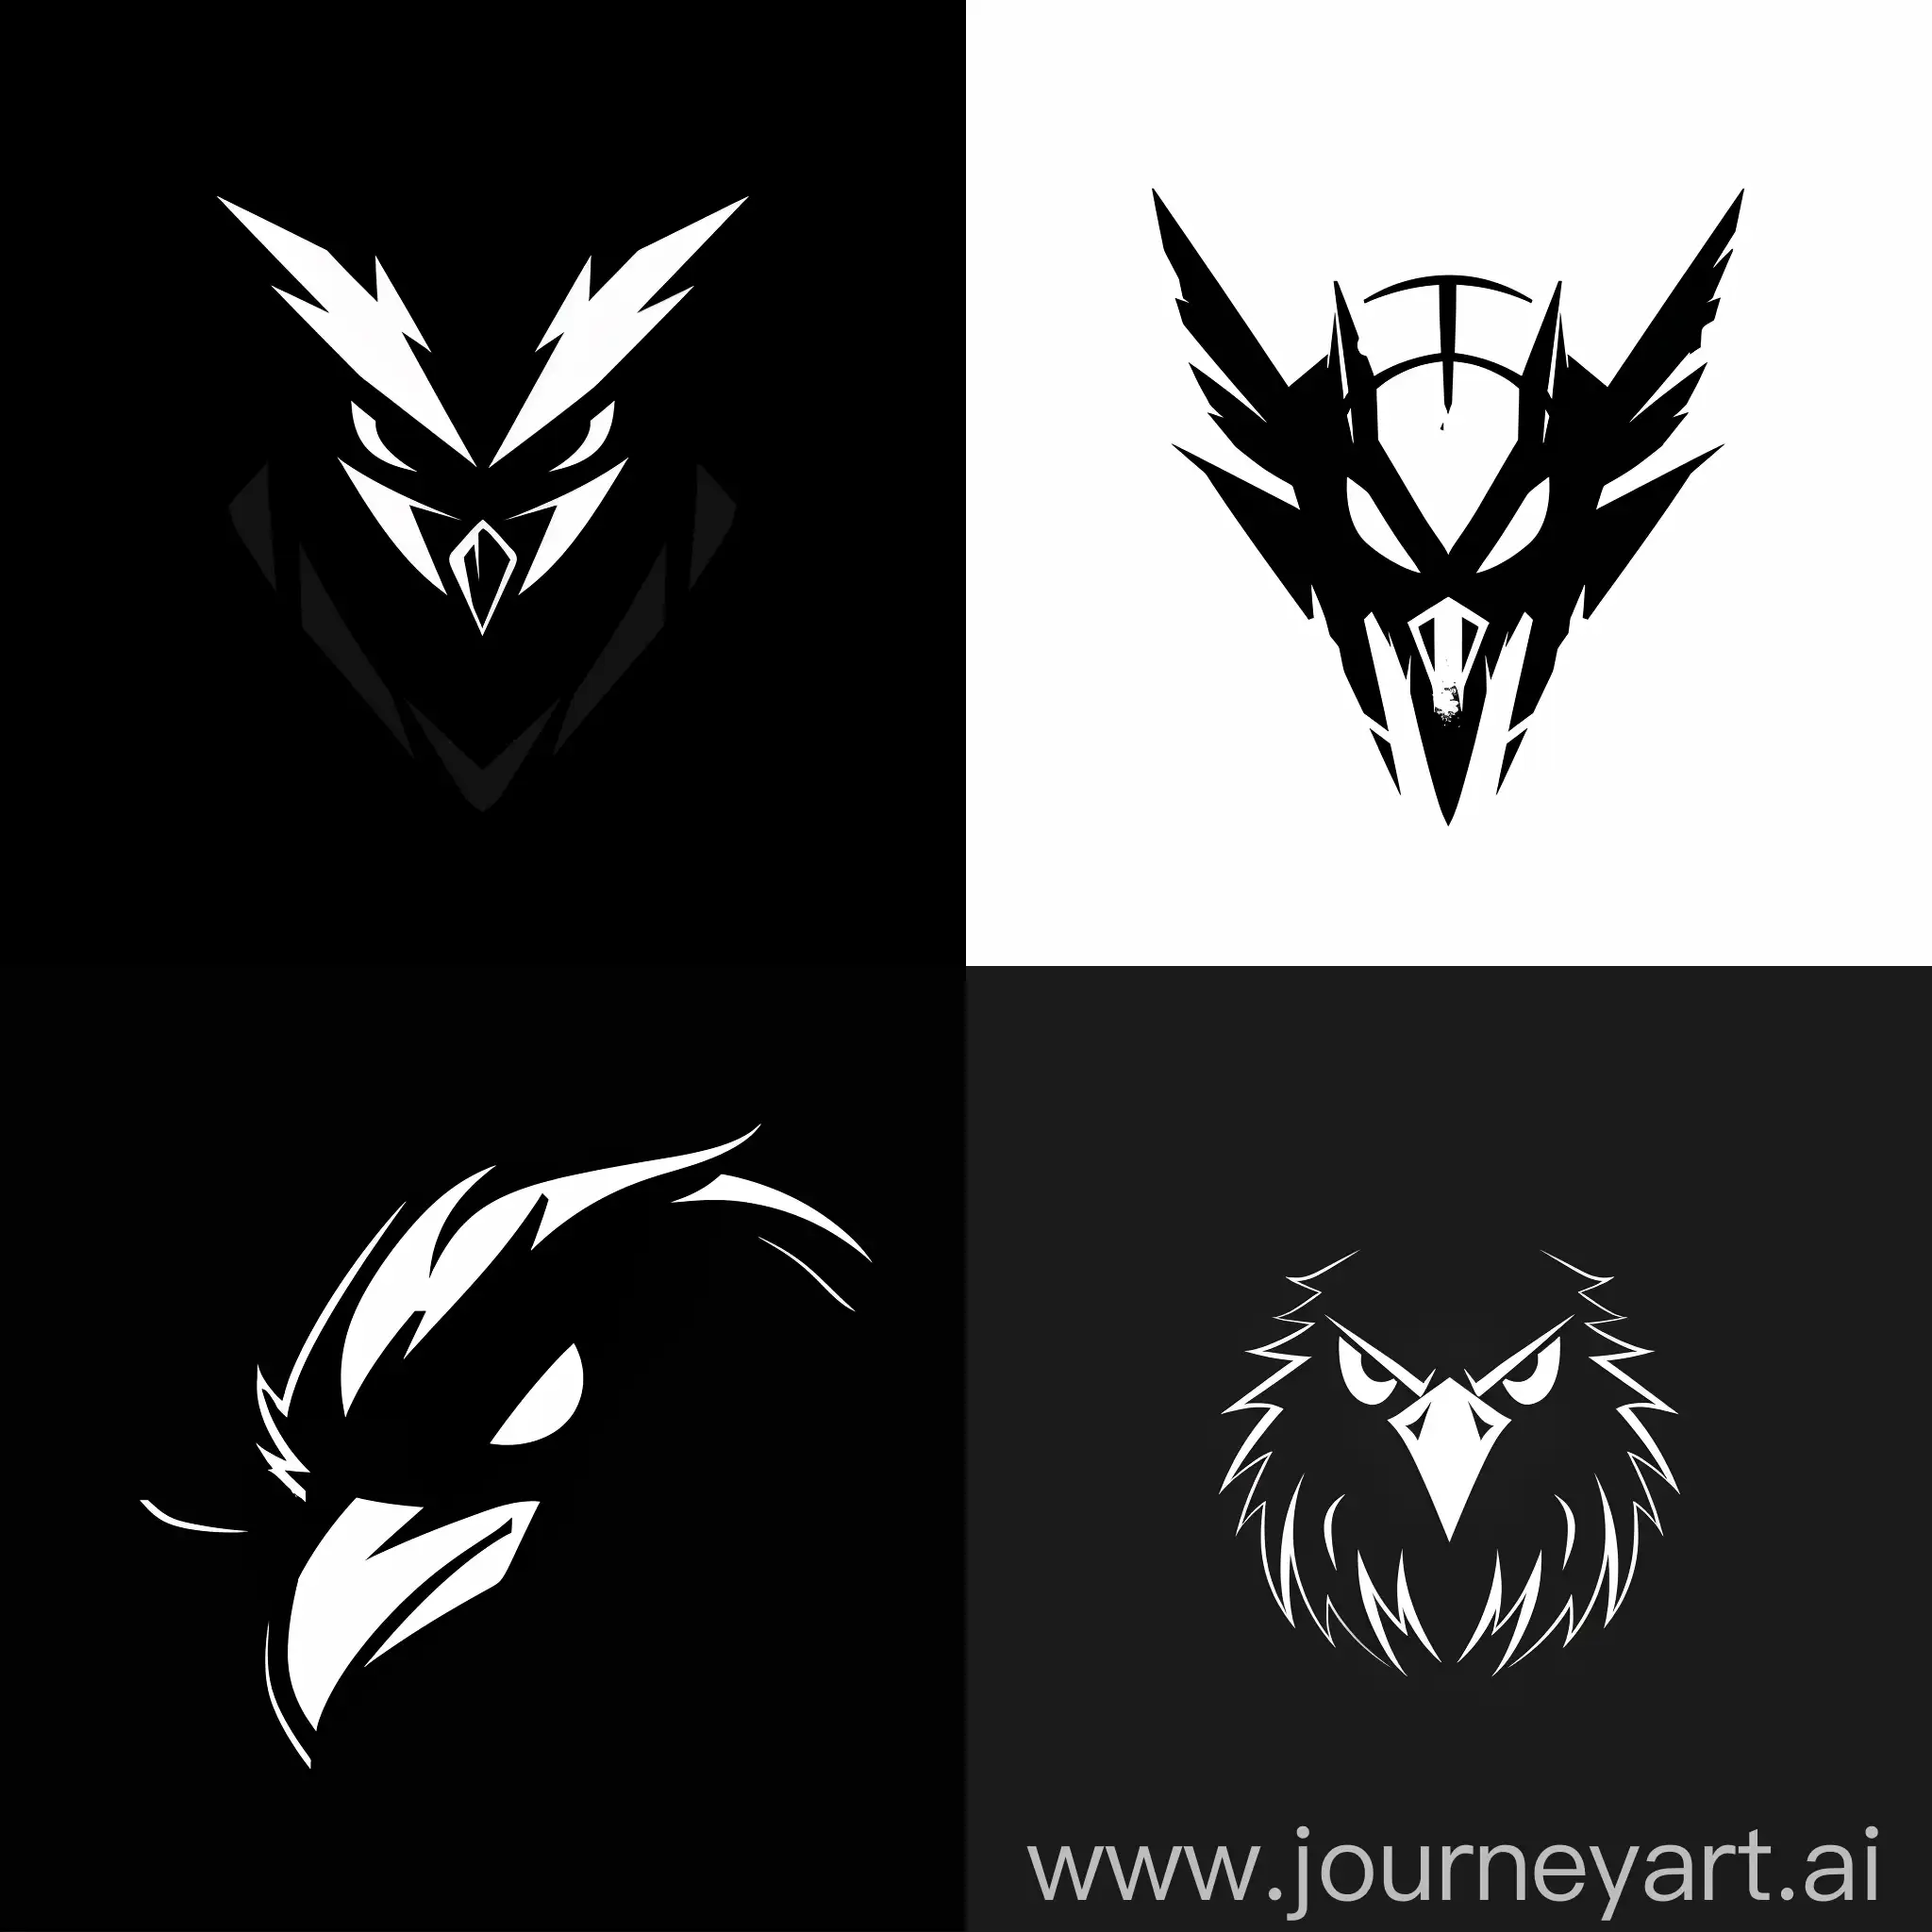 A minimalstic logo for fortnite raven skin, black and white